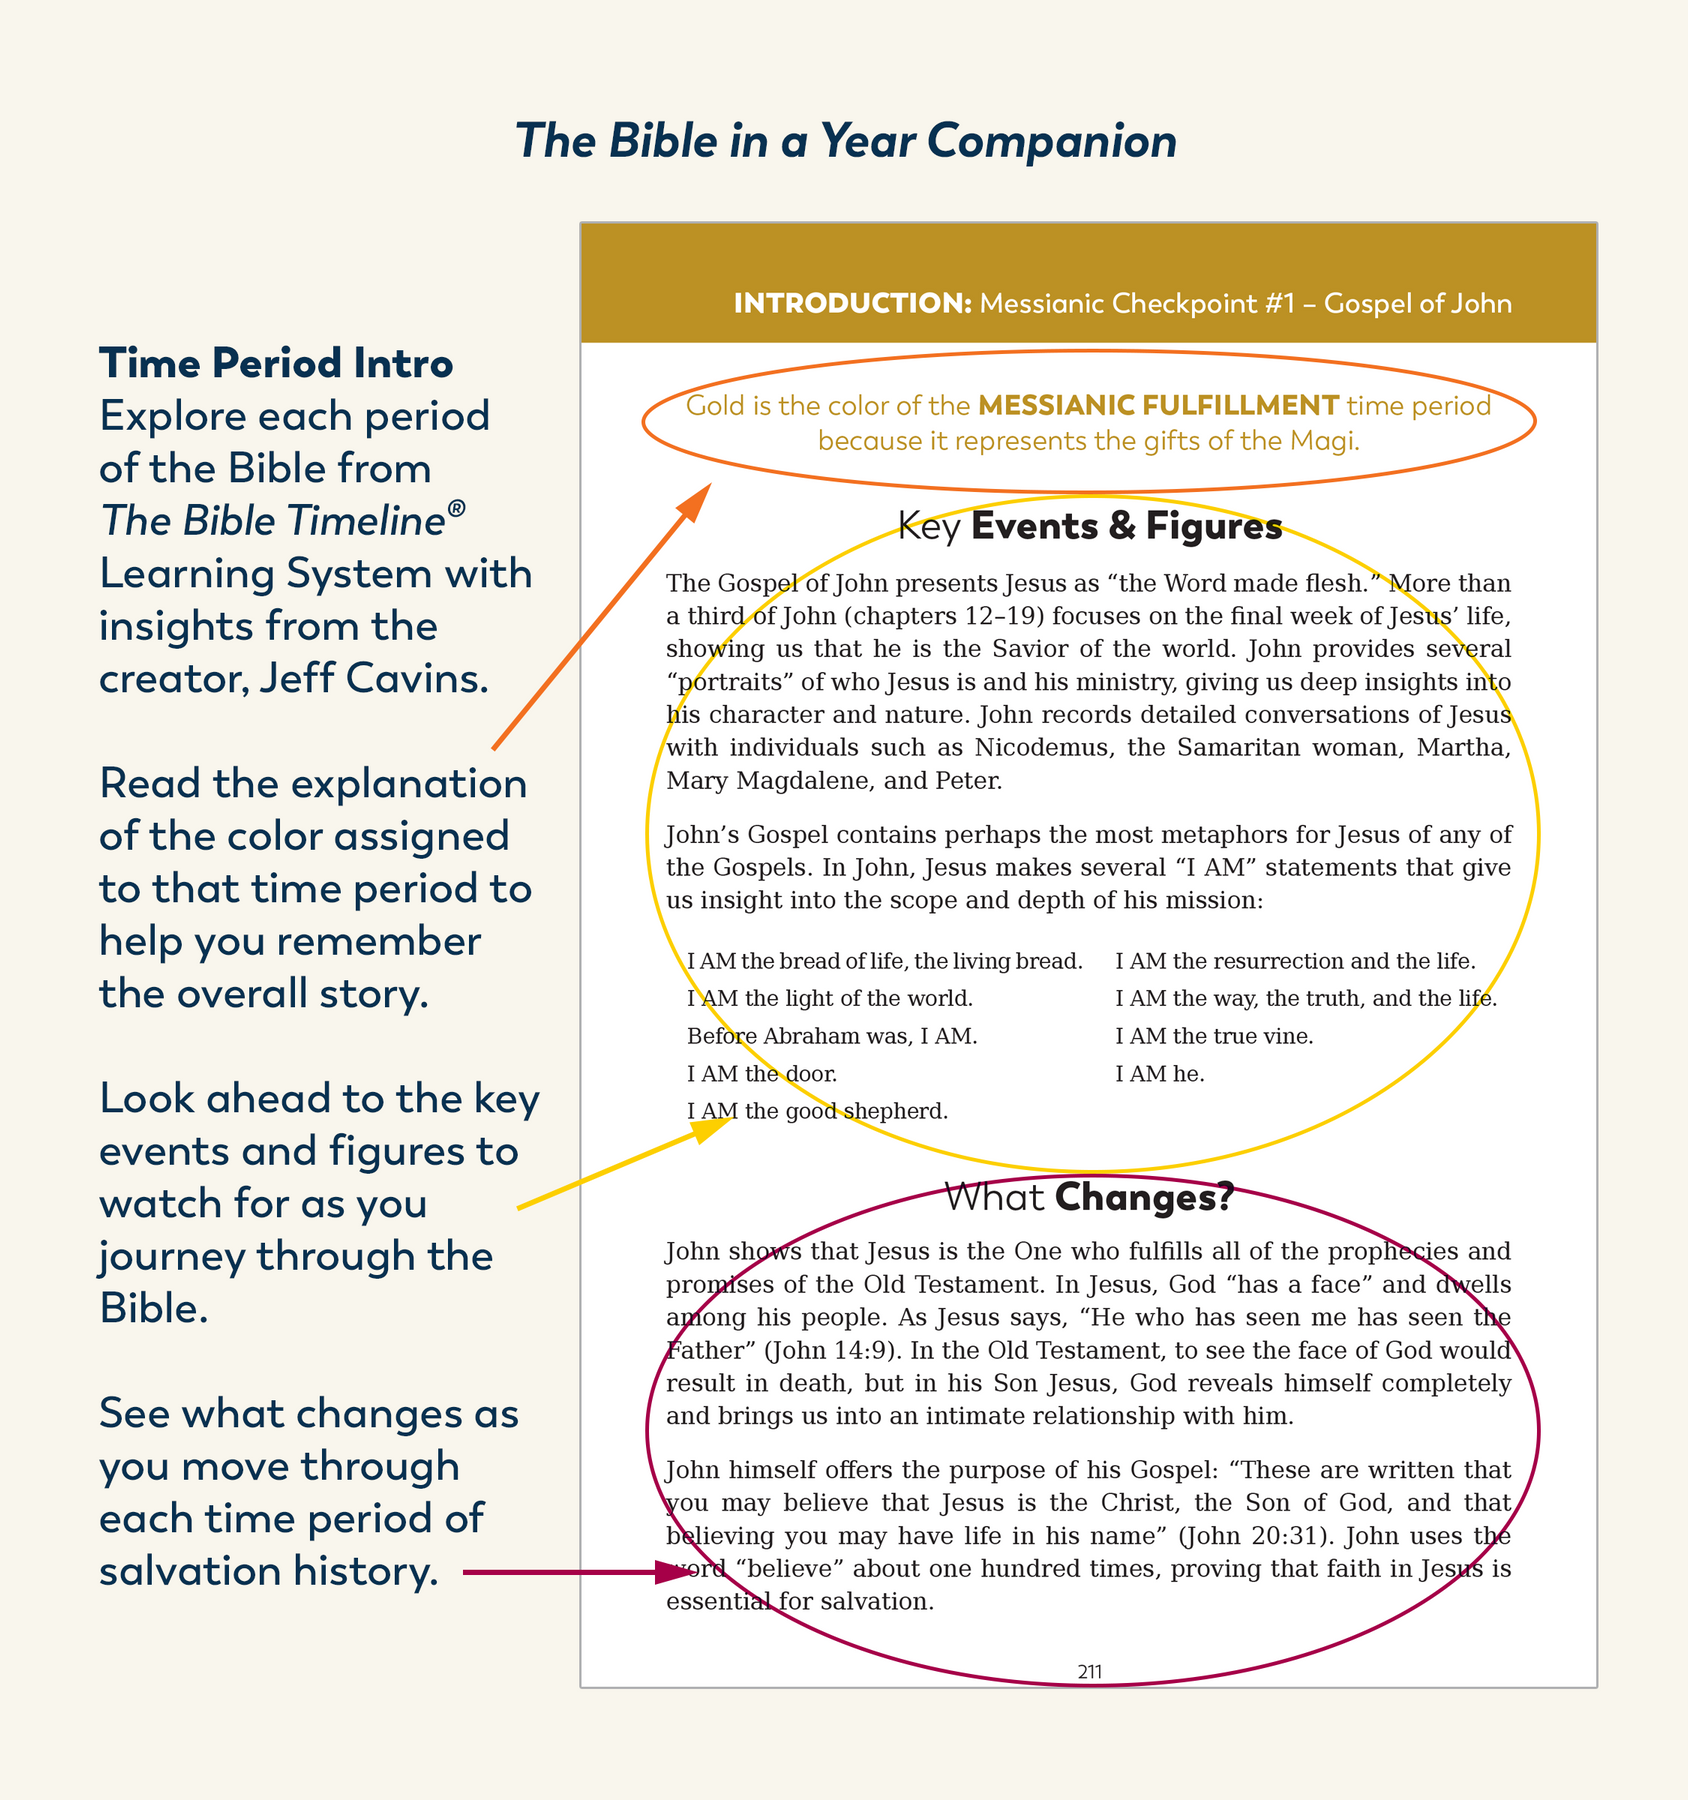 The Bible in a Year Companion Volume II